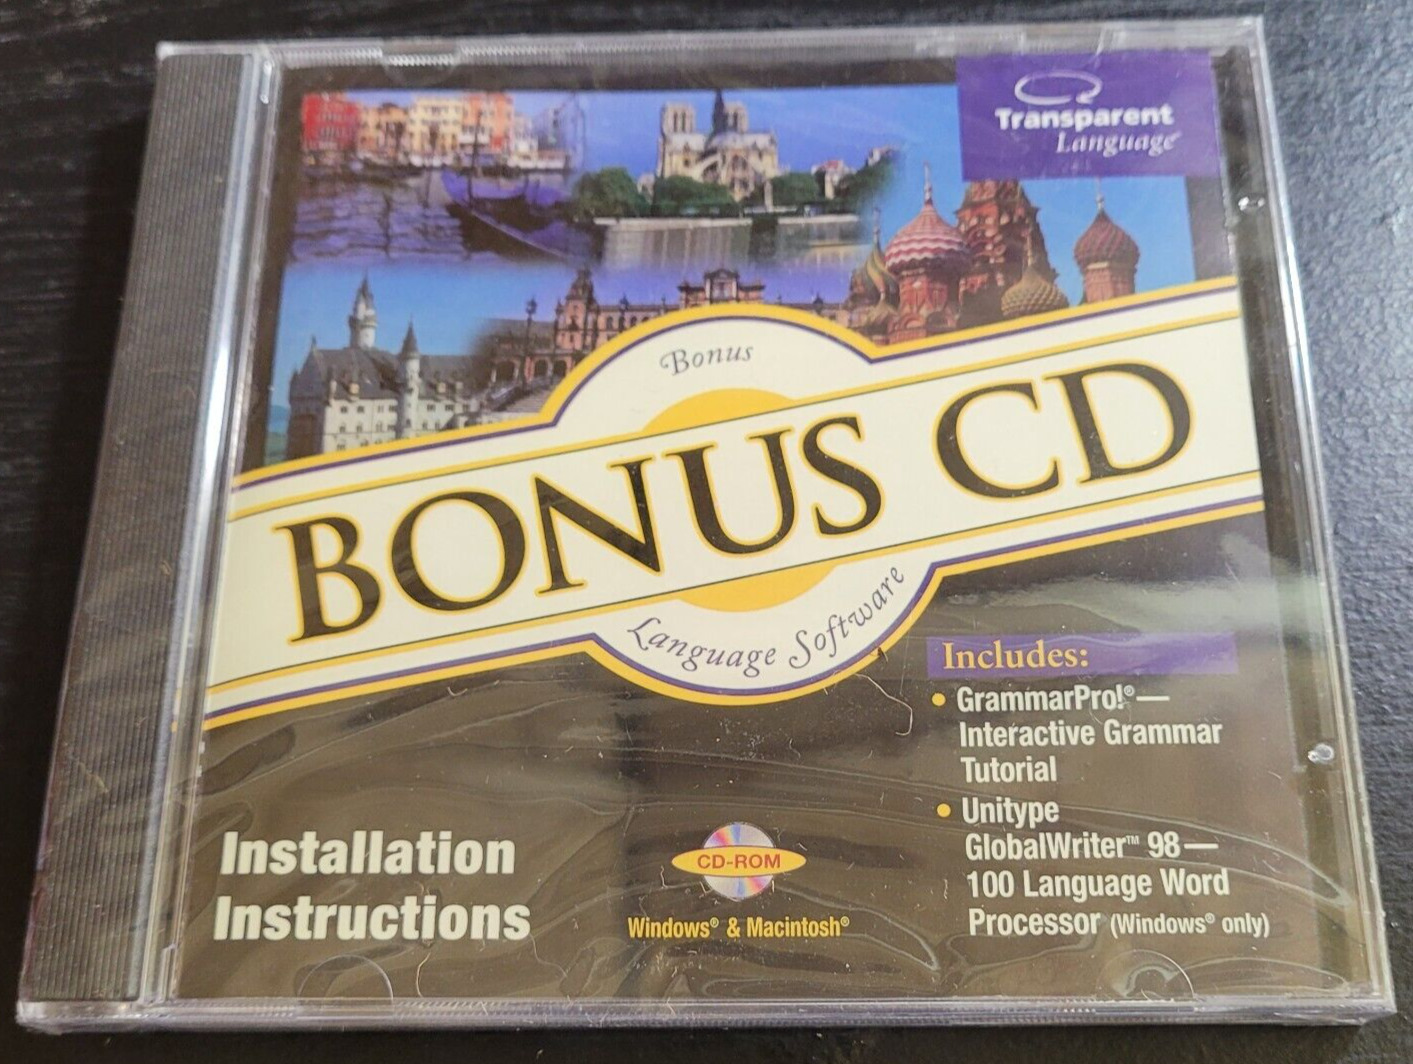 Transparent Language Bonus CD CD-Rom  Software Sealed